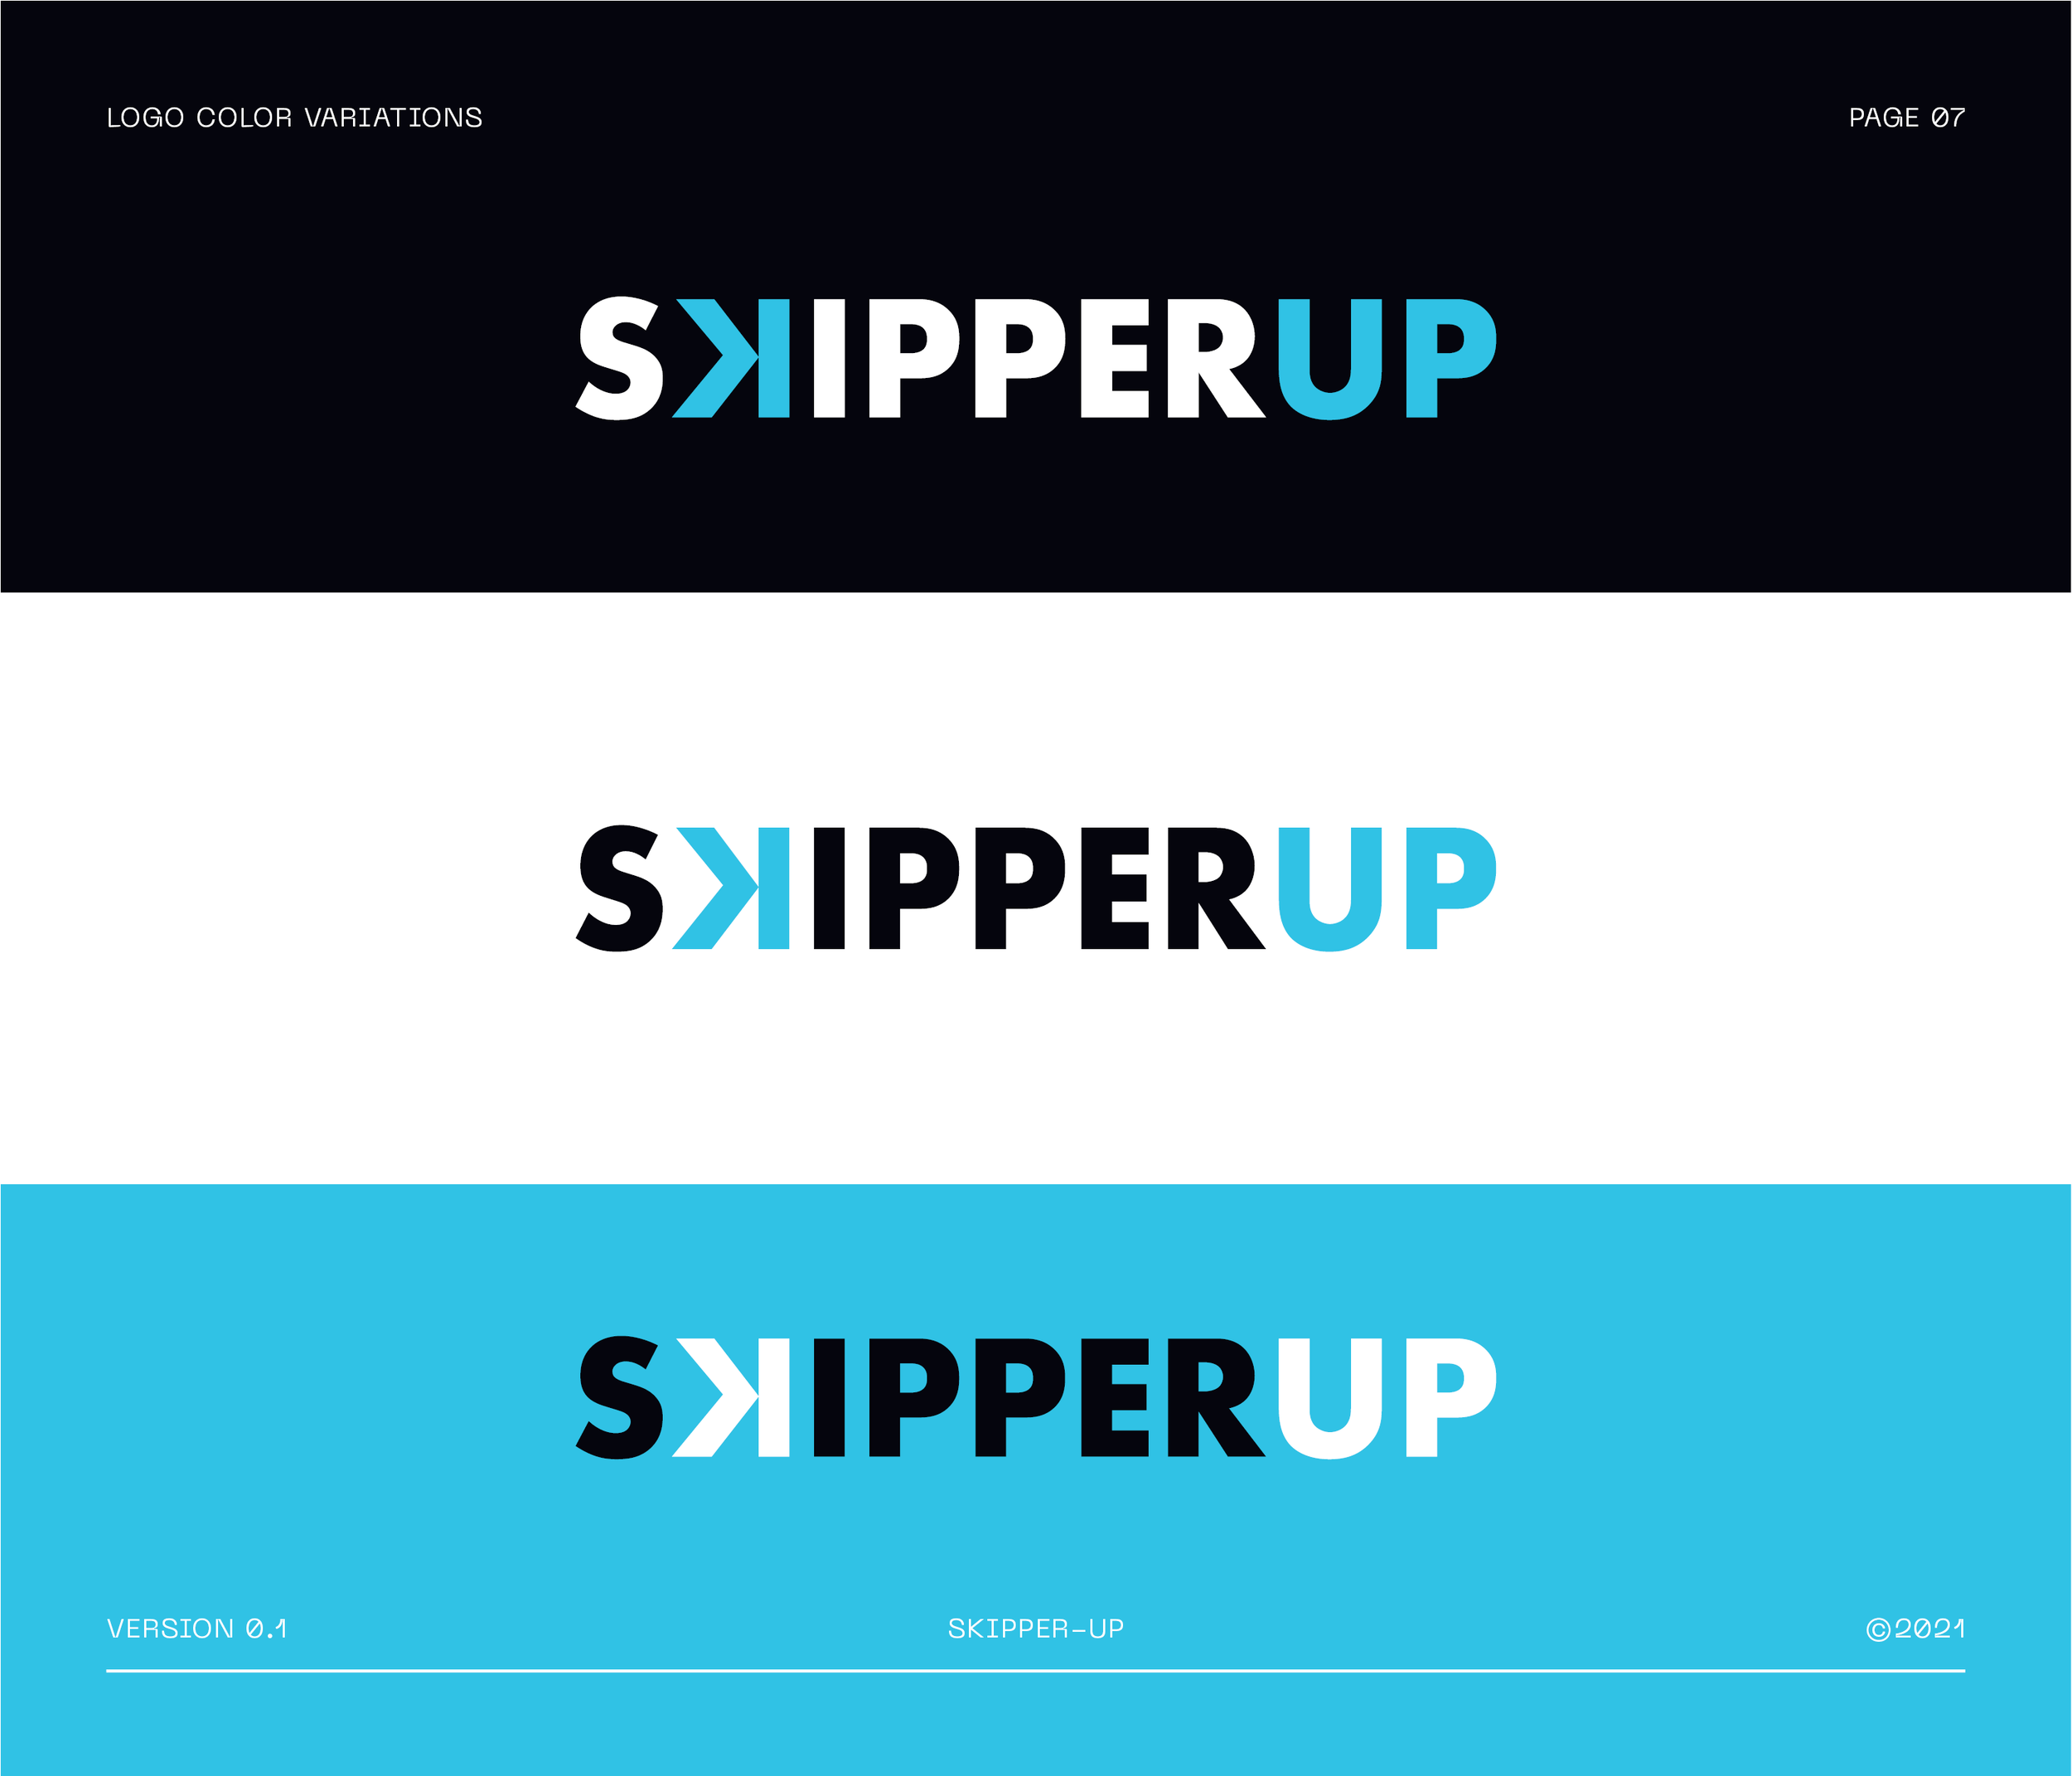 Skipper-Up Styleguide8.png